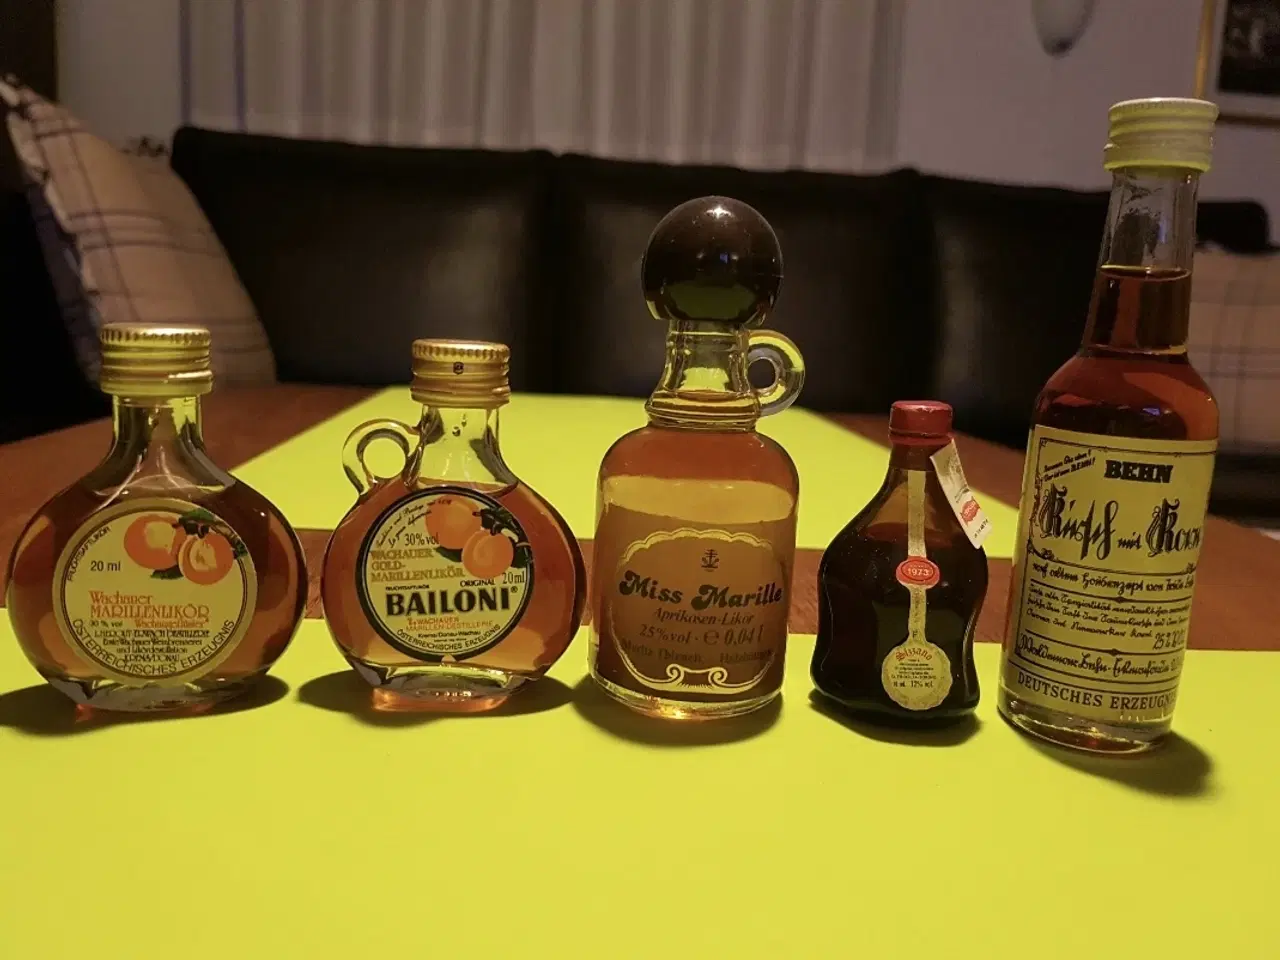 Billede 9 - Forskellige miniature / mini spiritusflasker